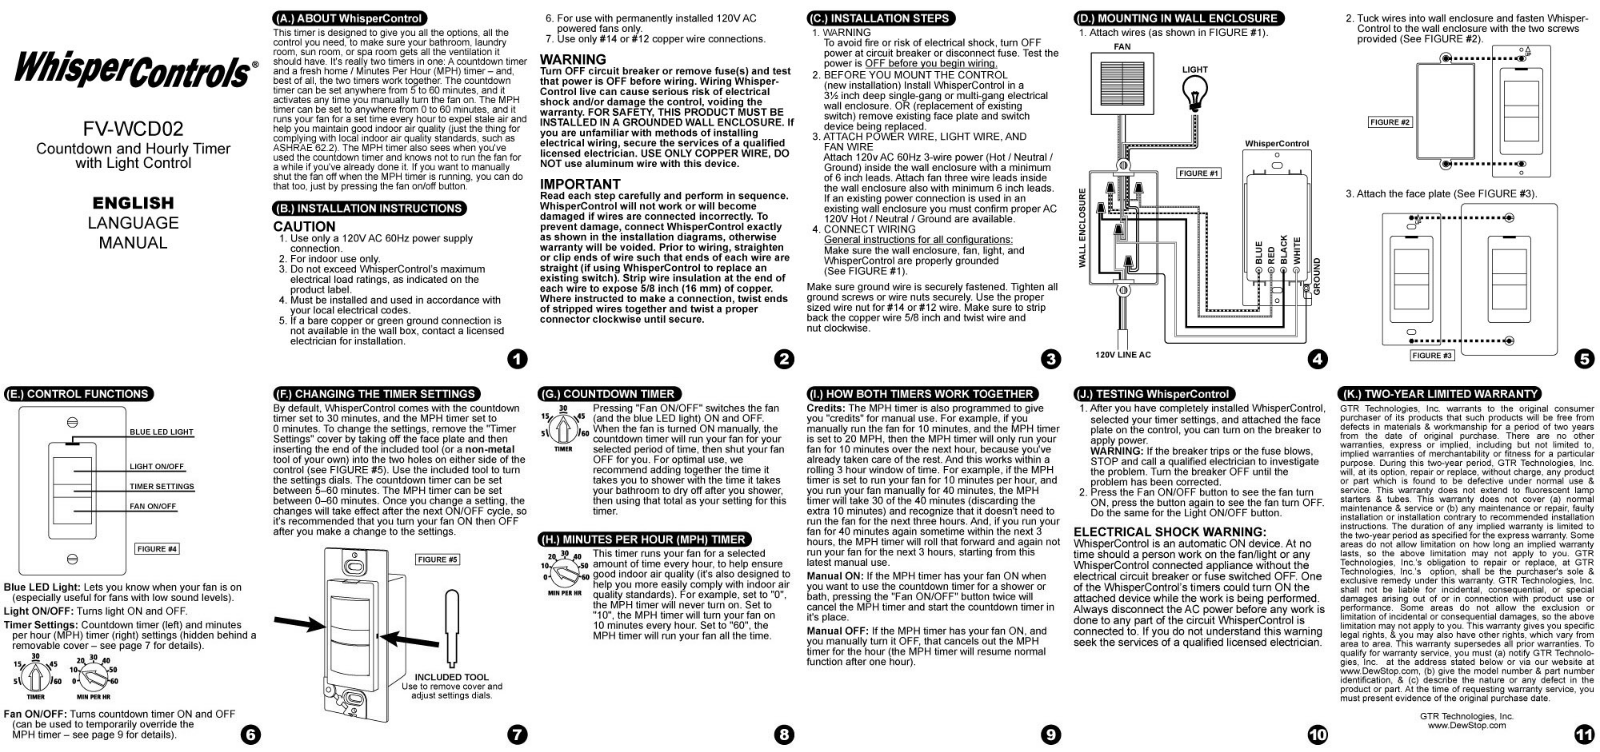 Panasonic FV-WCD02-A, FV-WCDO2-W Instruction Manual